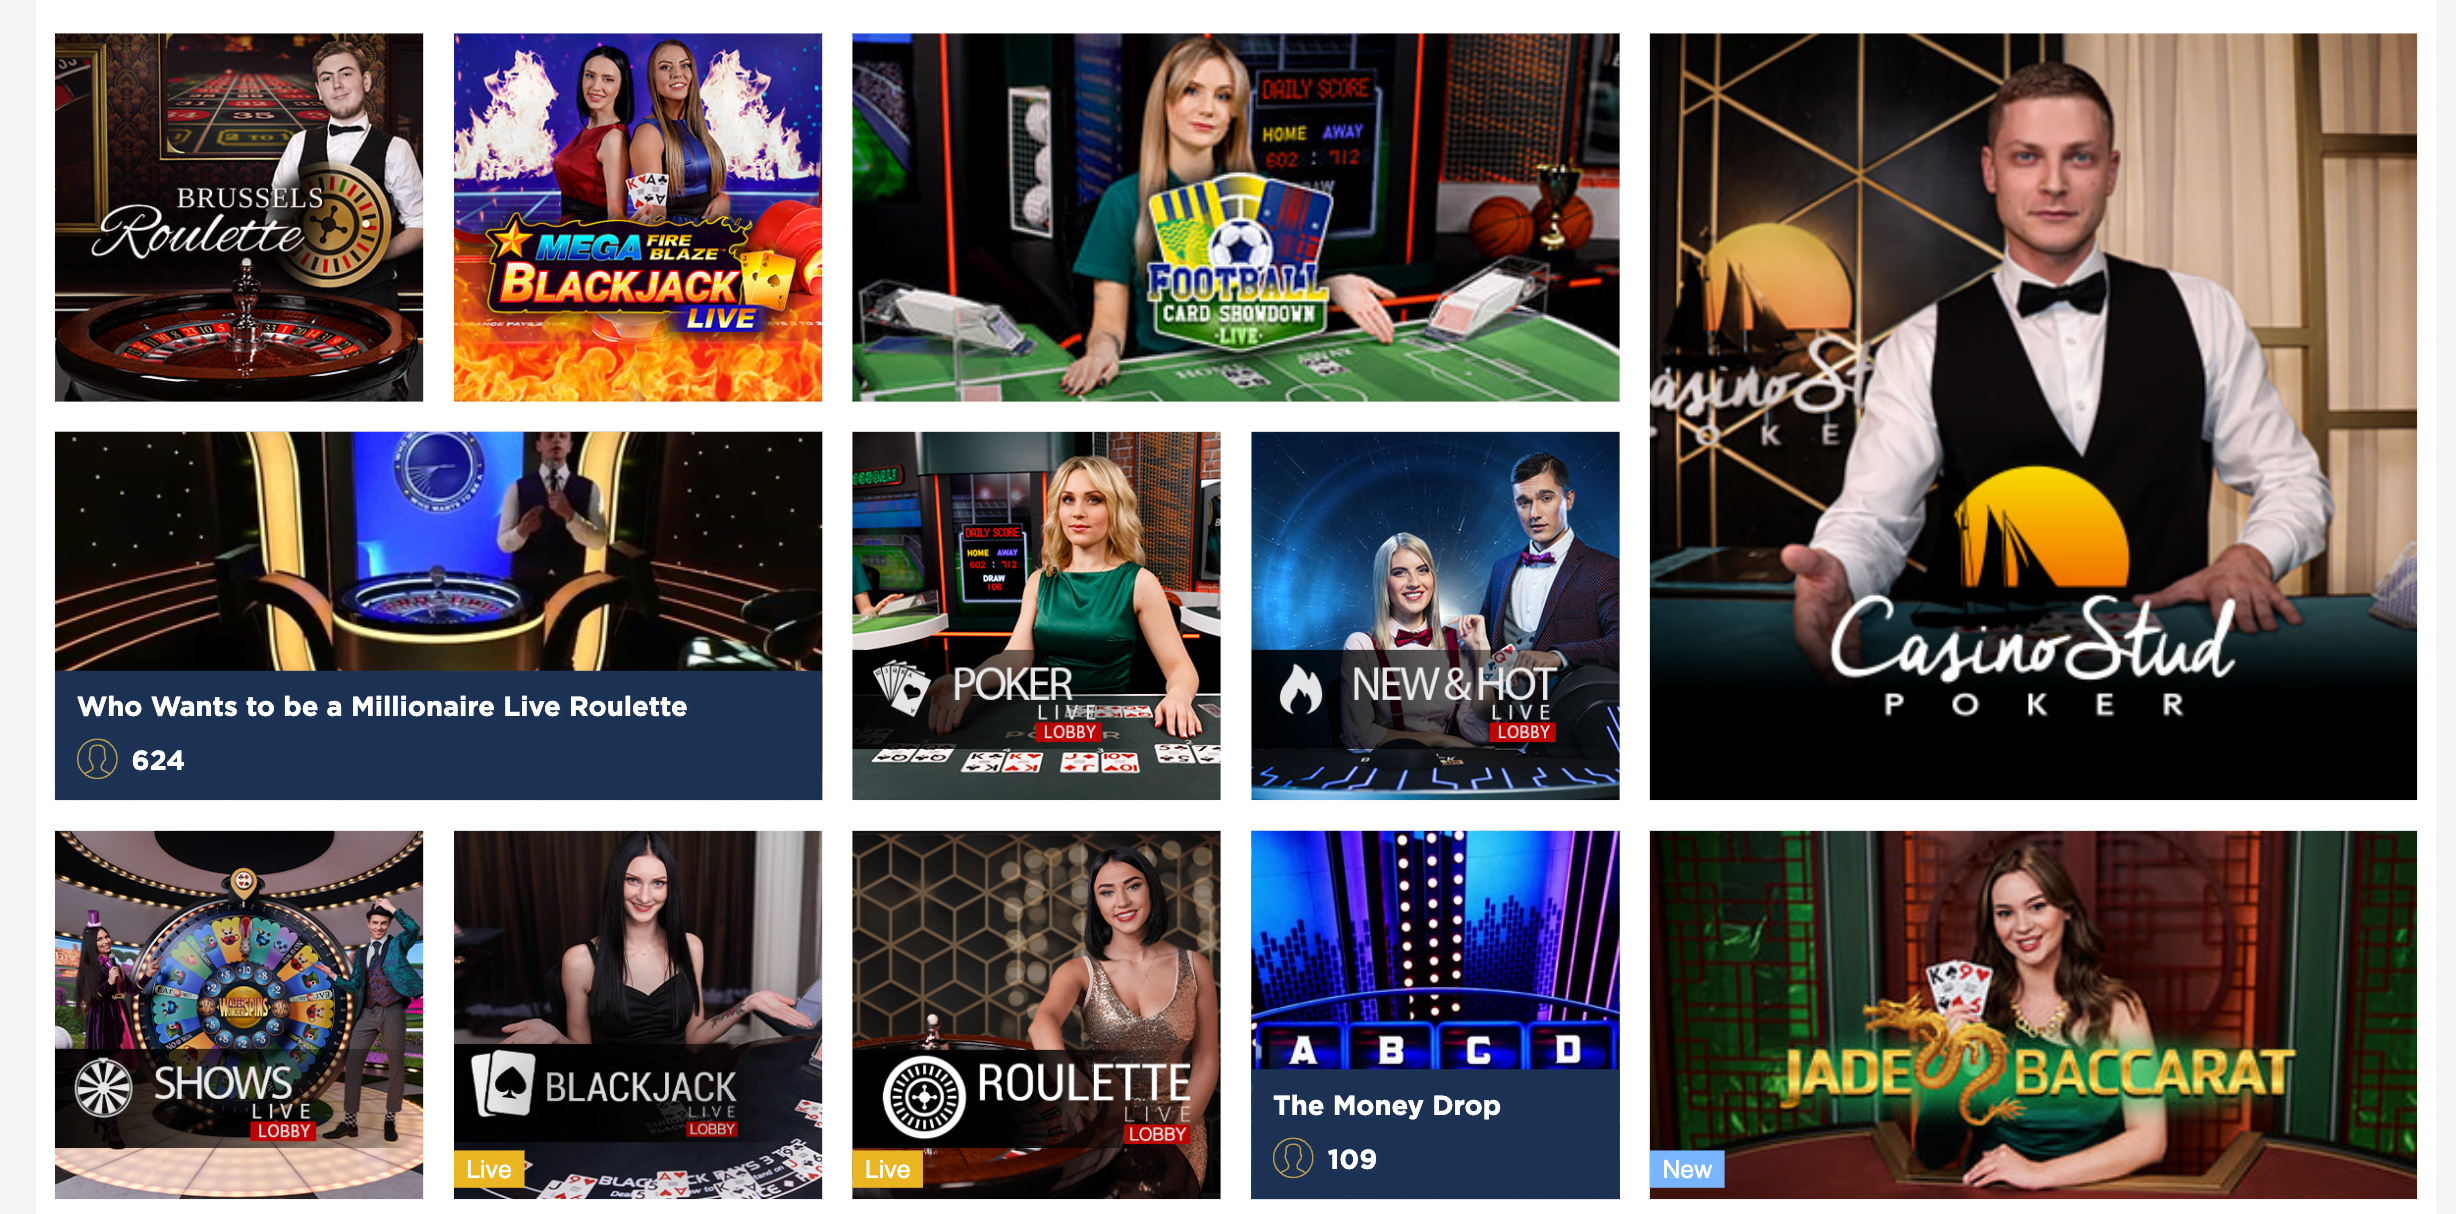 europa casino review live dealer games